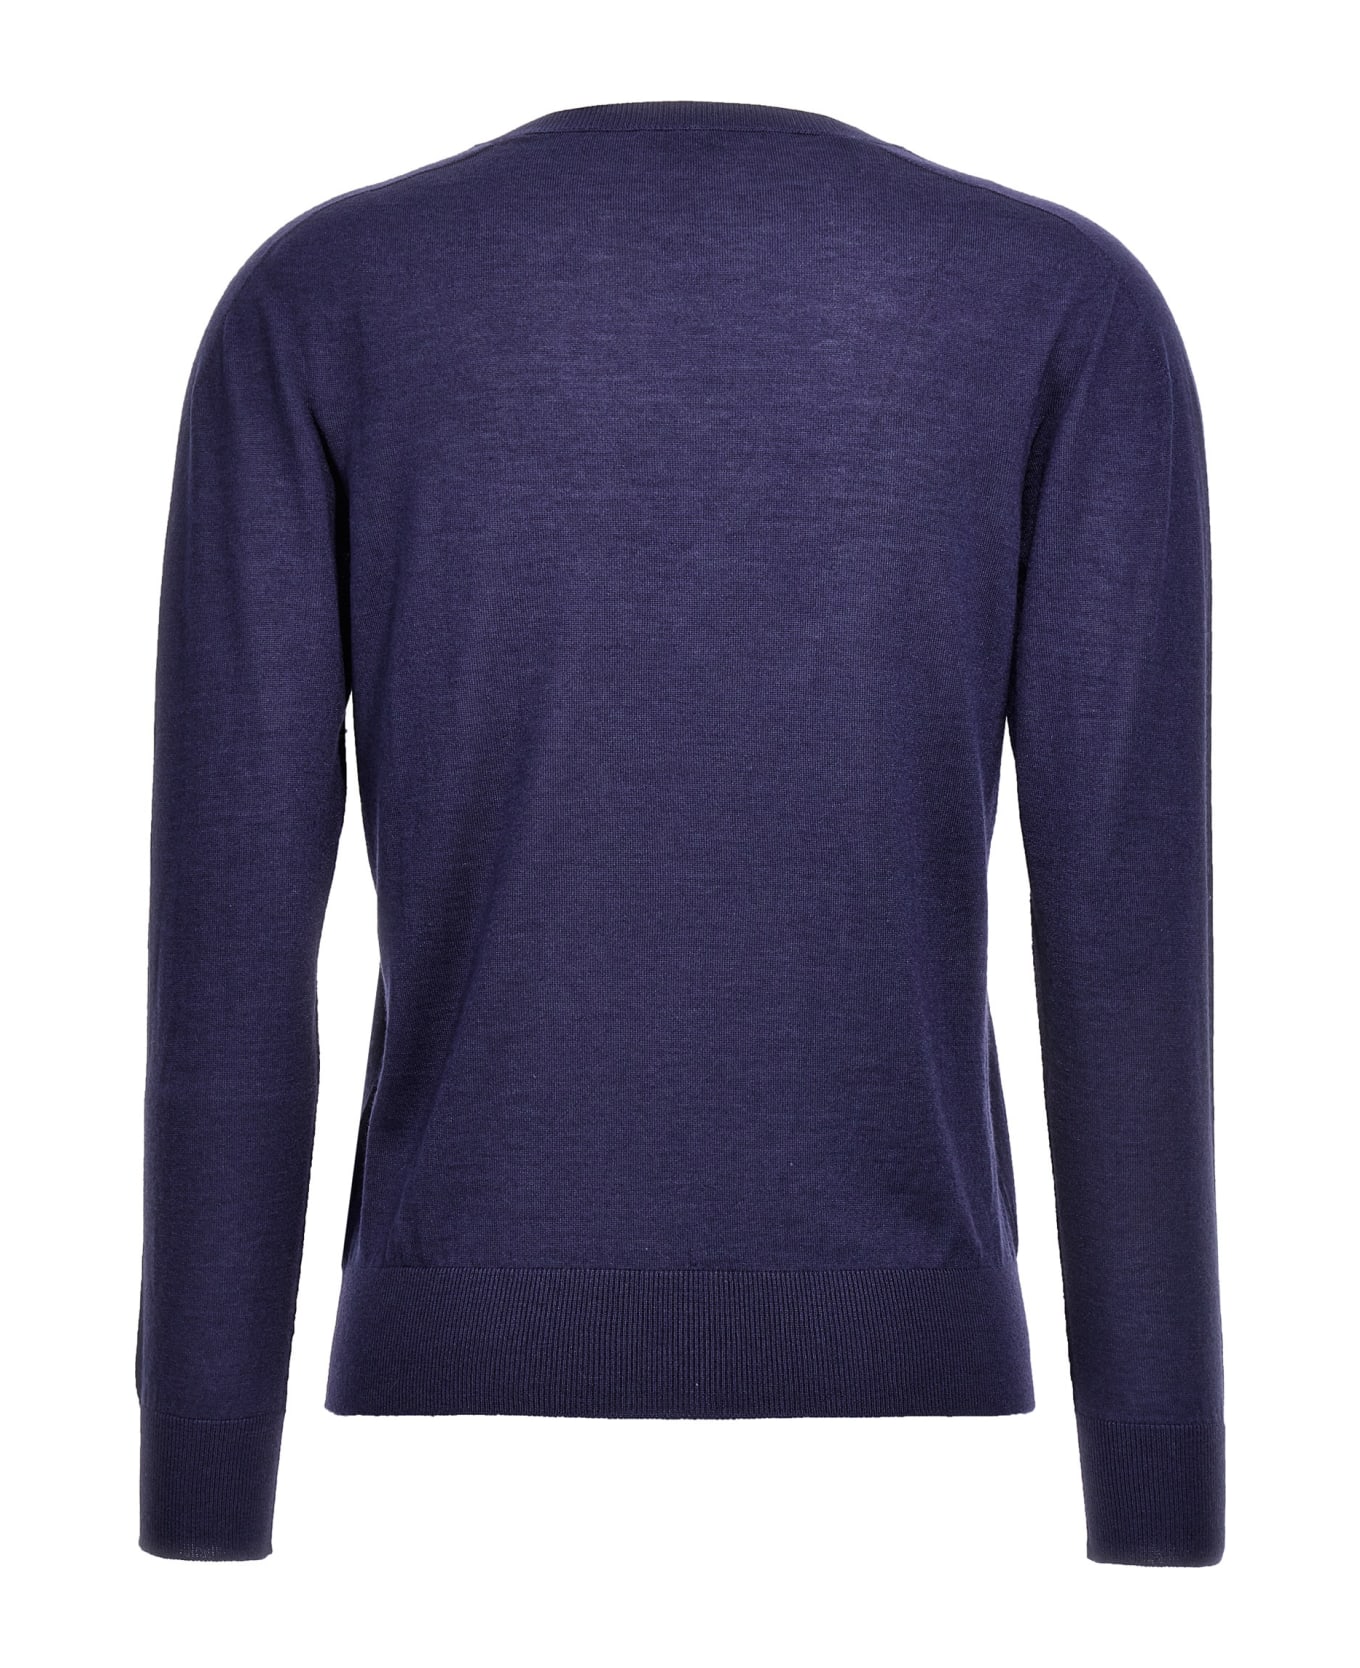 Kiton V-neck Sweater - Blue